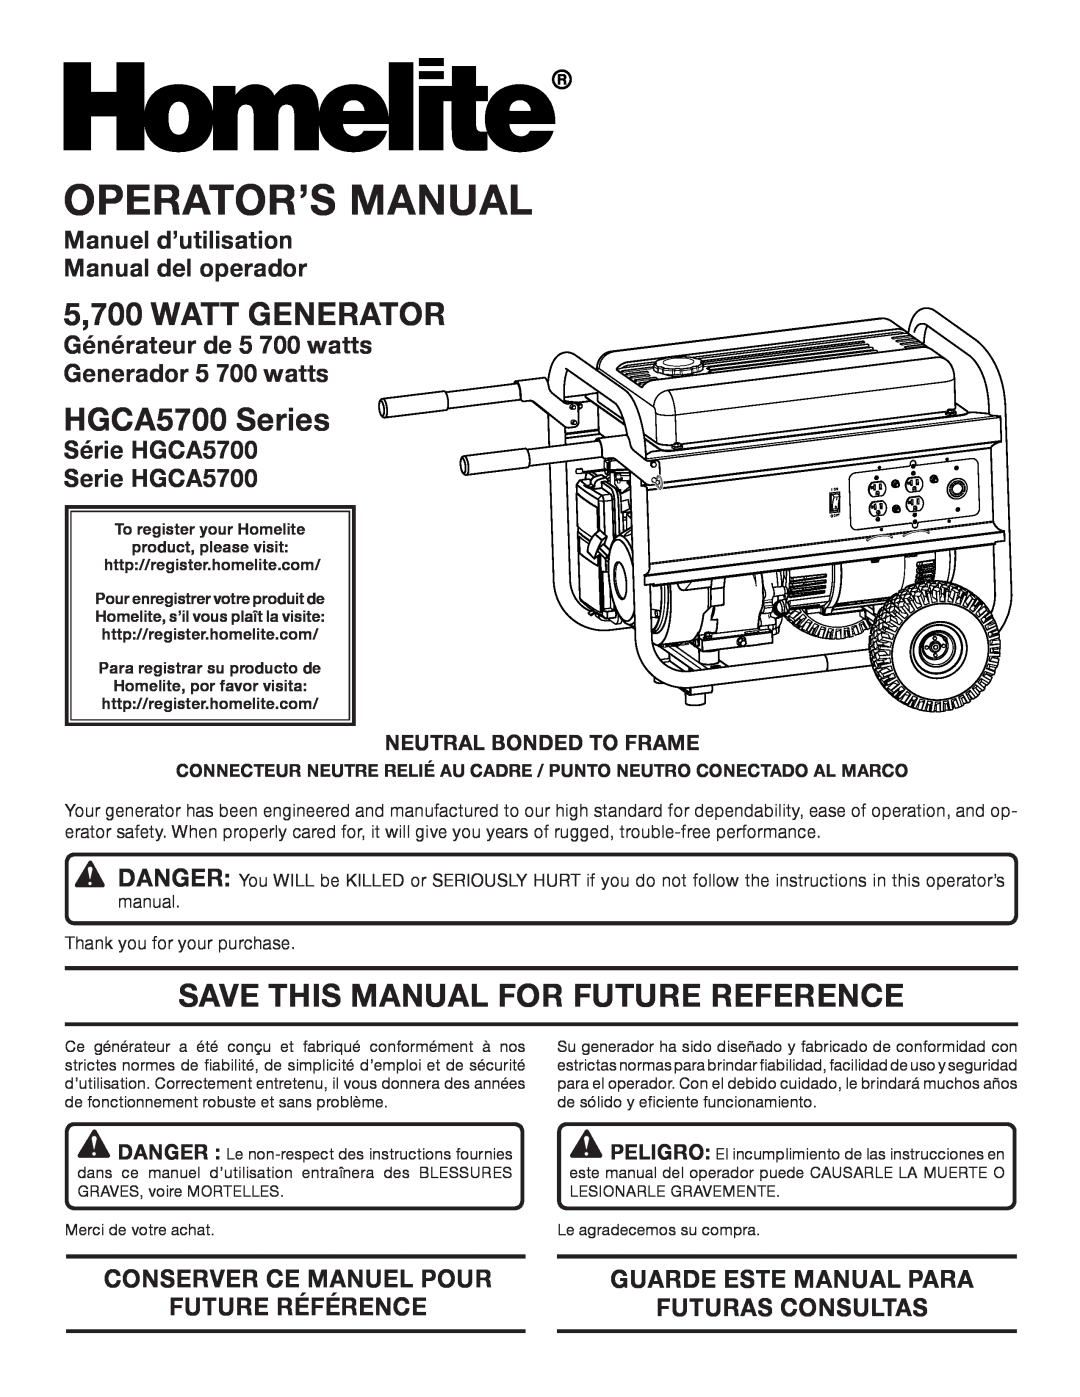 Homelite manuel dutilisation 5,700 WATT GENERATOR, HGCA5700 Series, Save This Manual For Future Reference 